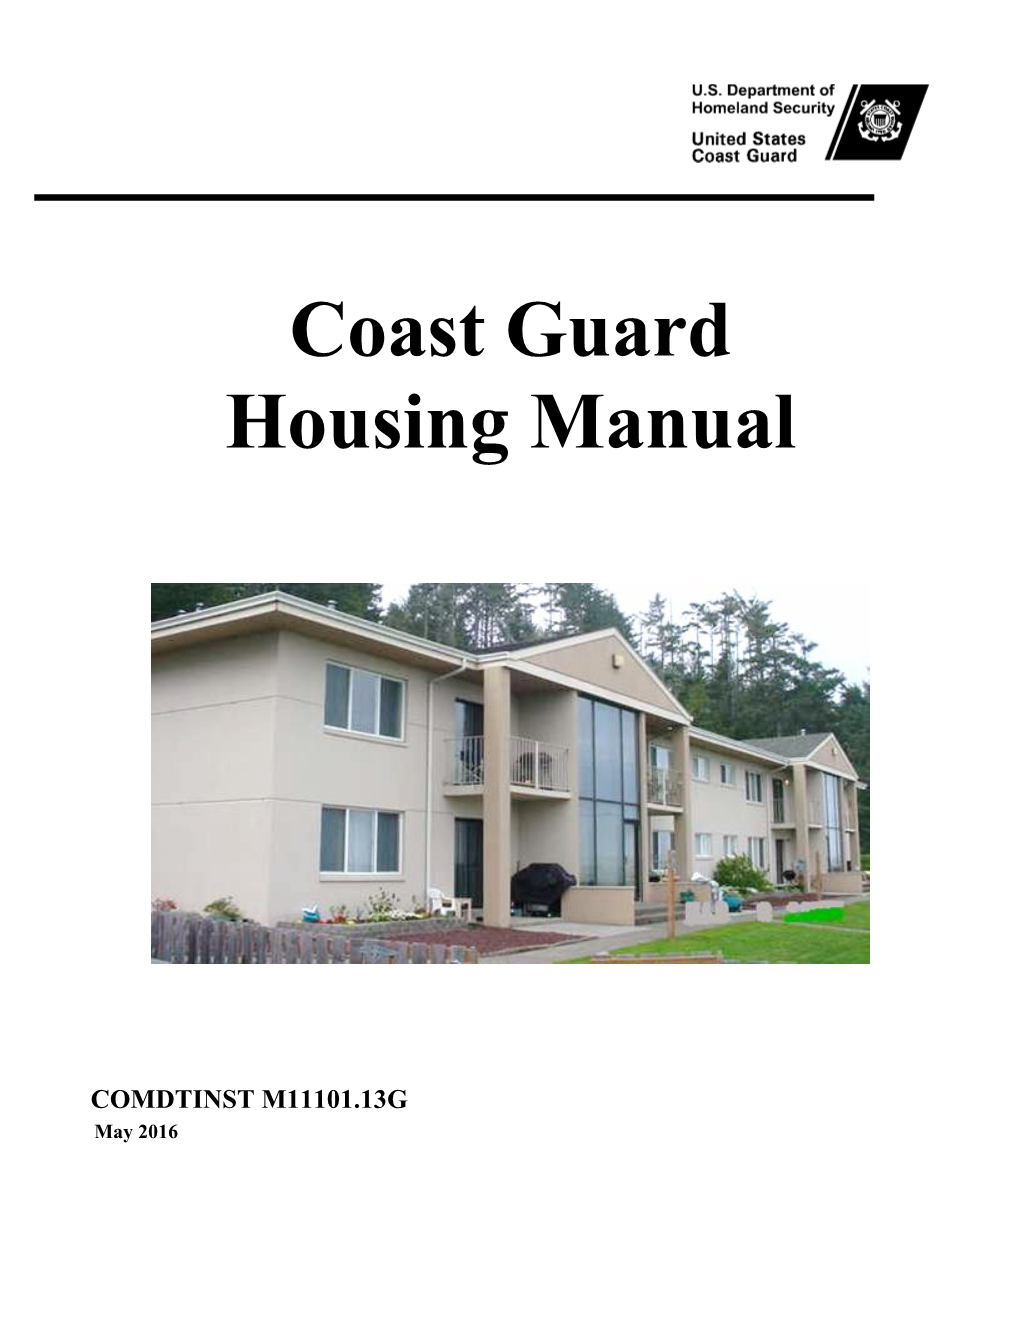 Coast Guard Housing Manual, Comdtinst M11101.13G